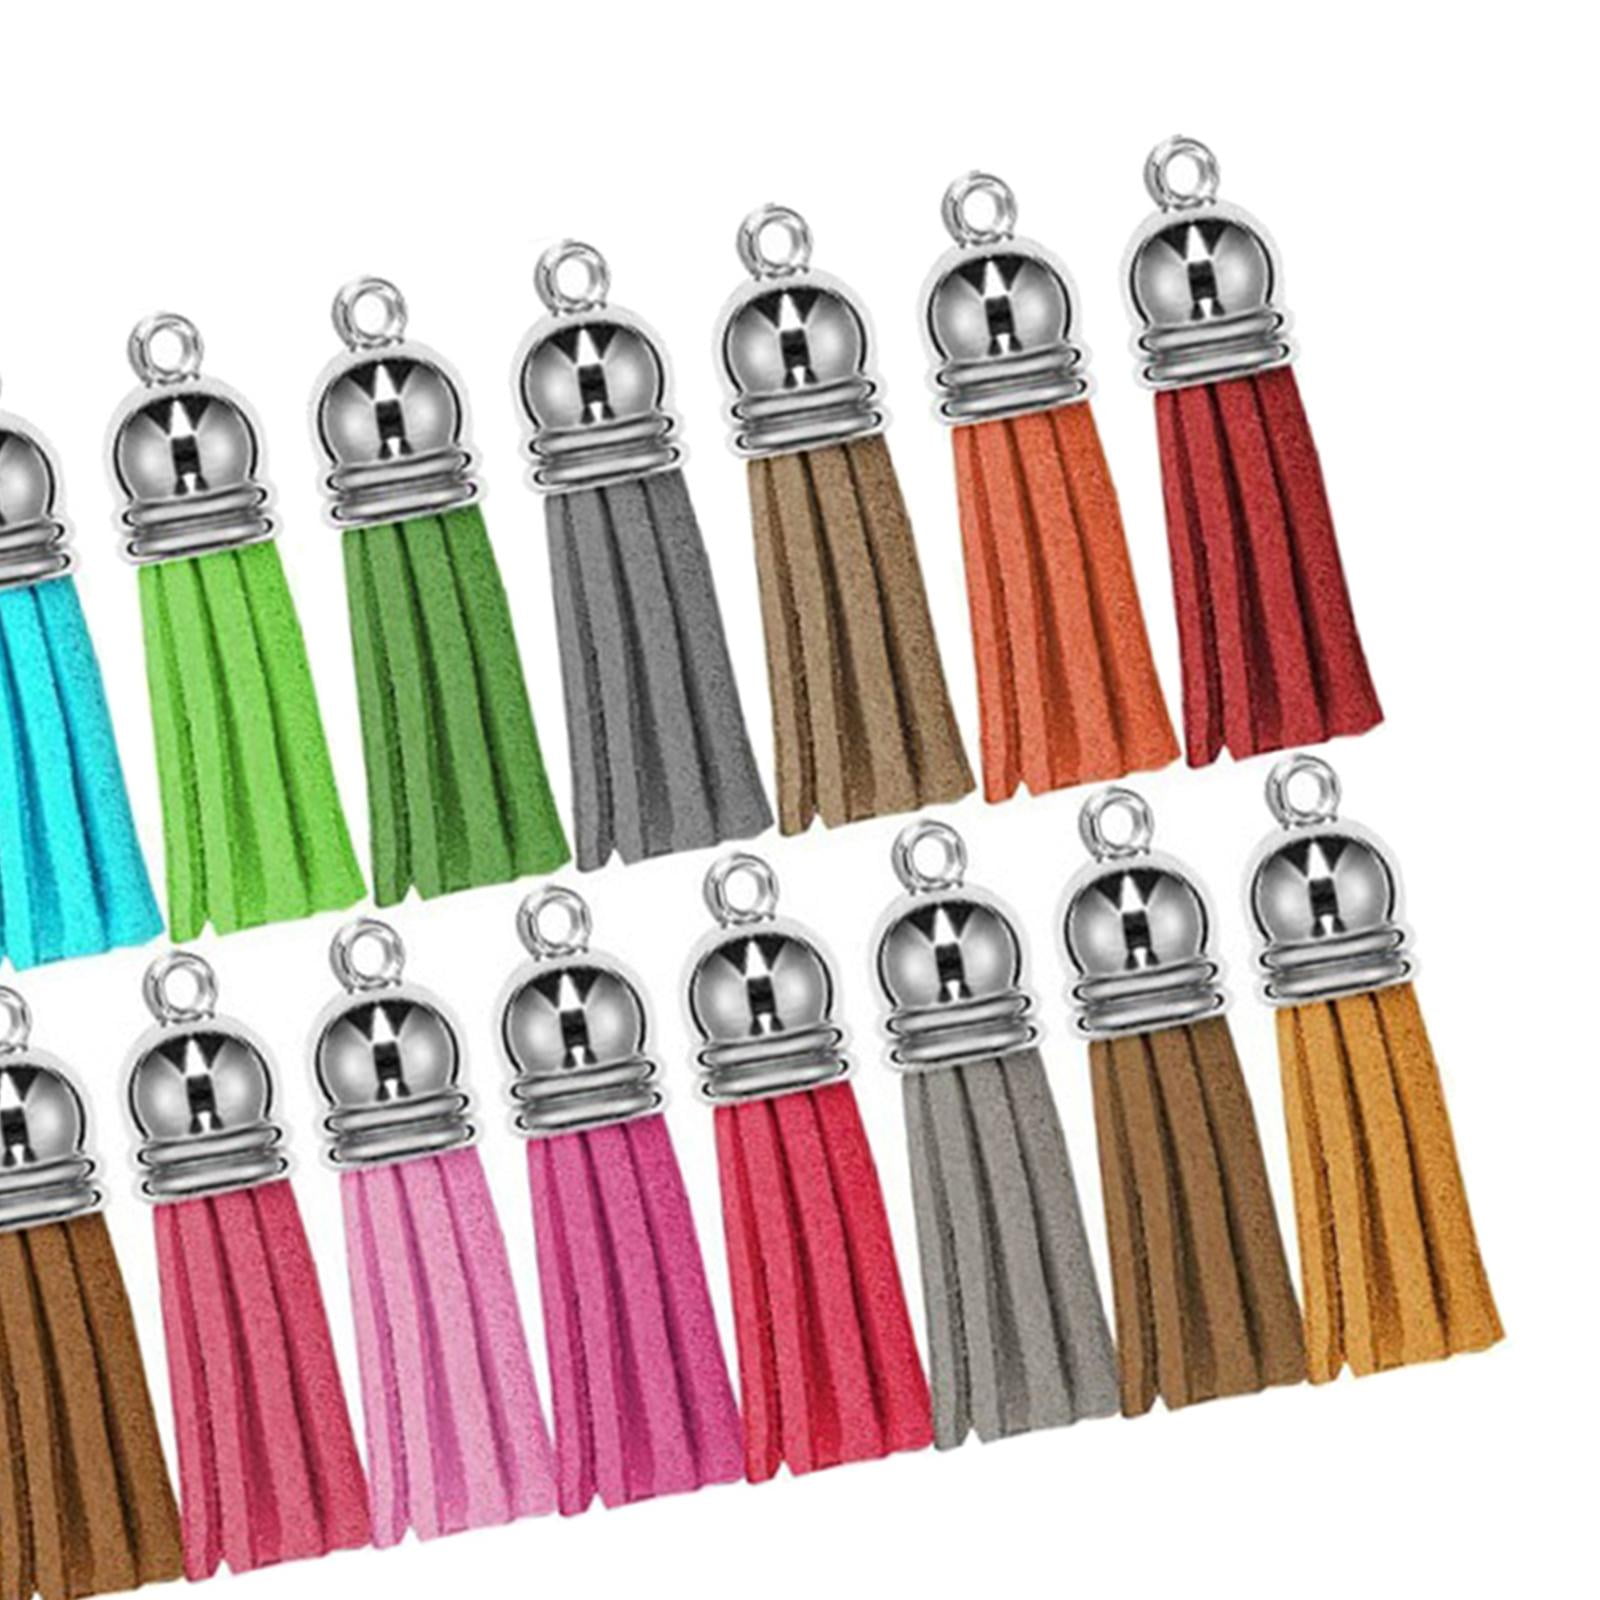 50pcs Mix Keychain Tassels Bulk PU Leather Tassel Pendants for DIY Keychain  and Craft